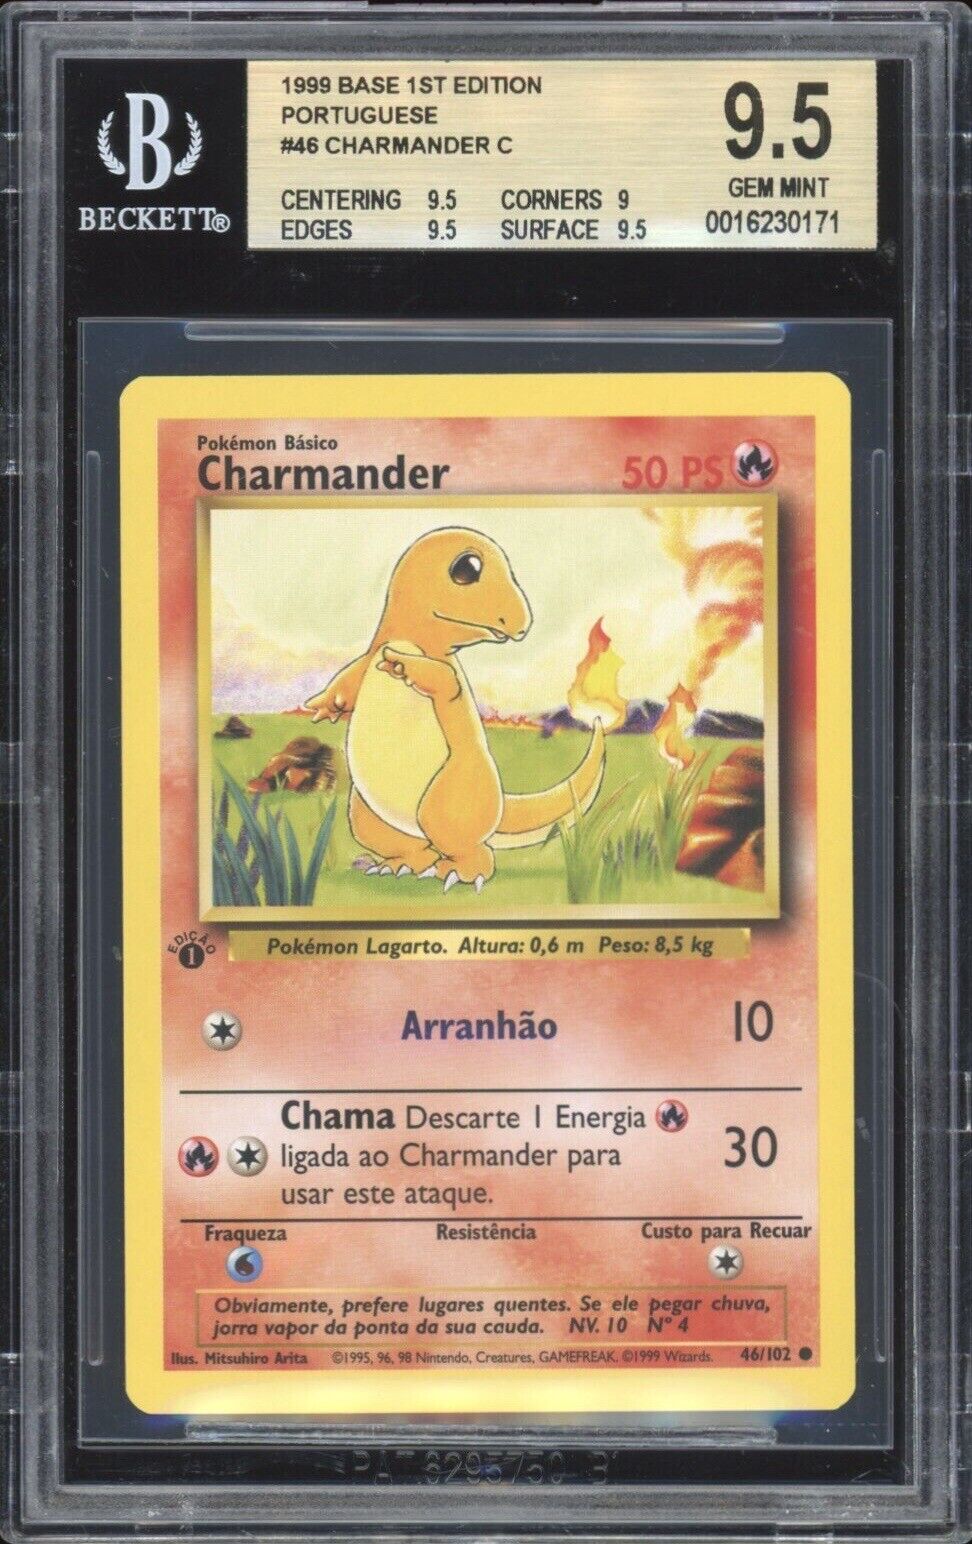 1999 Pokemon PORTUGUESE 1st Edition Base Set Charmander 46/102 BGS 9.5 GEM MINT